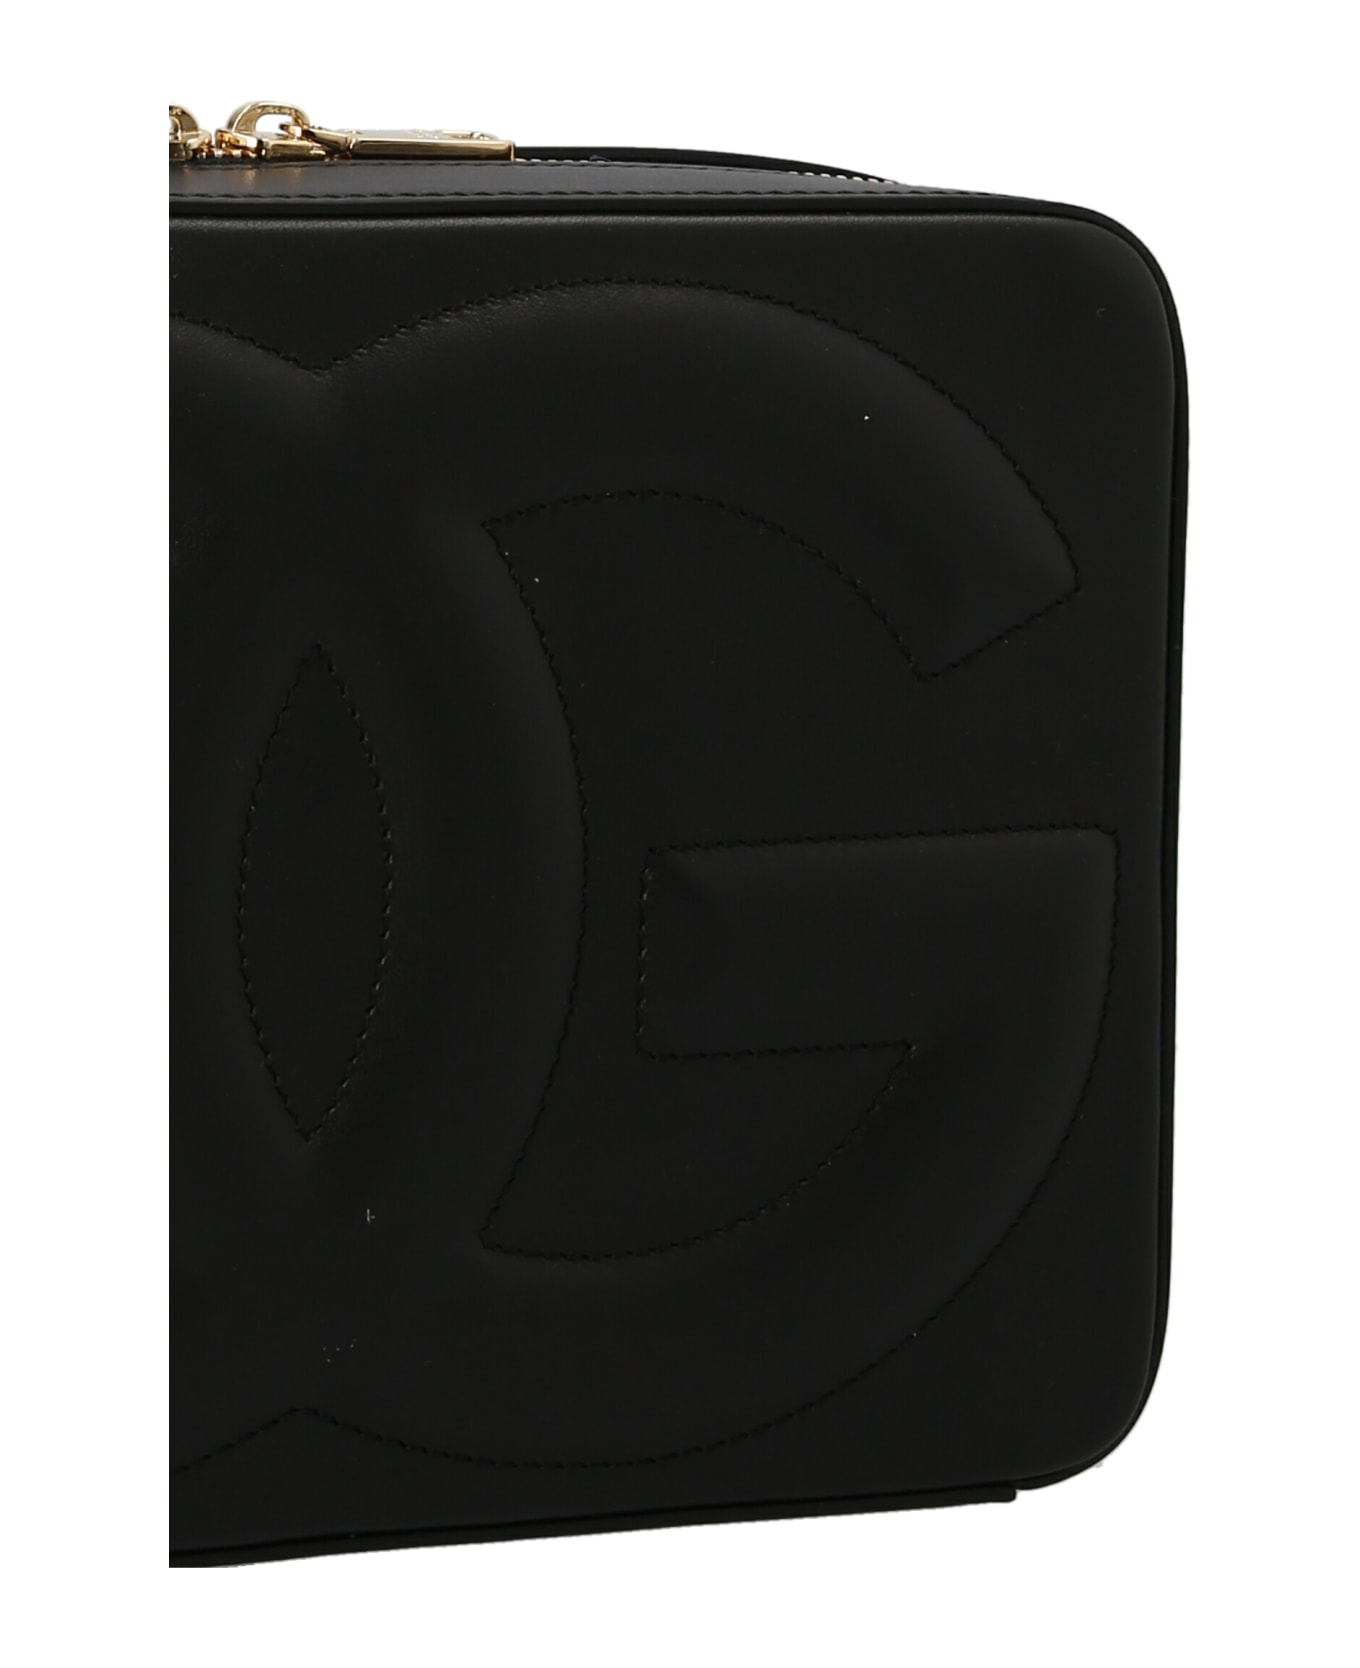 Dolce & Gabbana Dg Camera Bag  Crossbody Bag - Black  